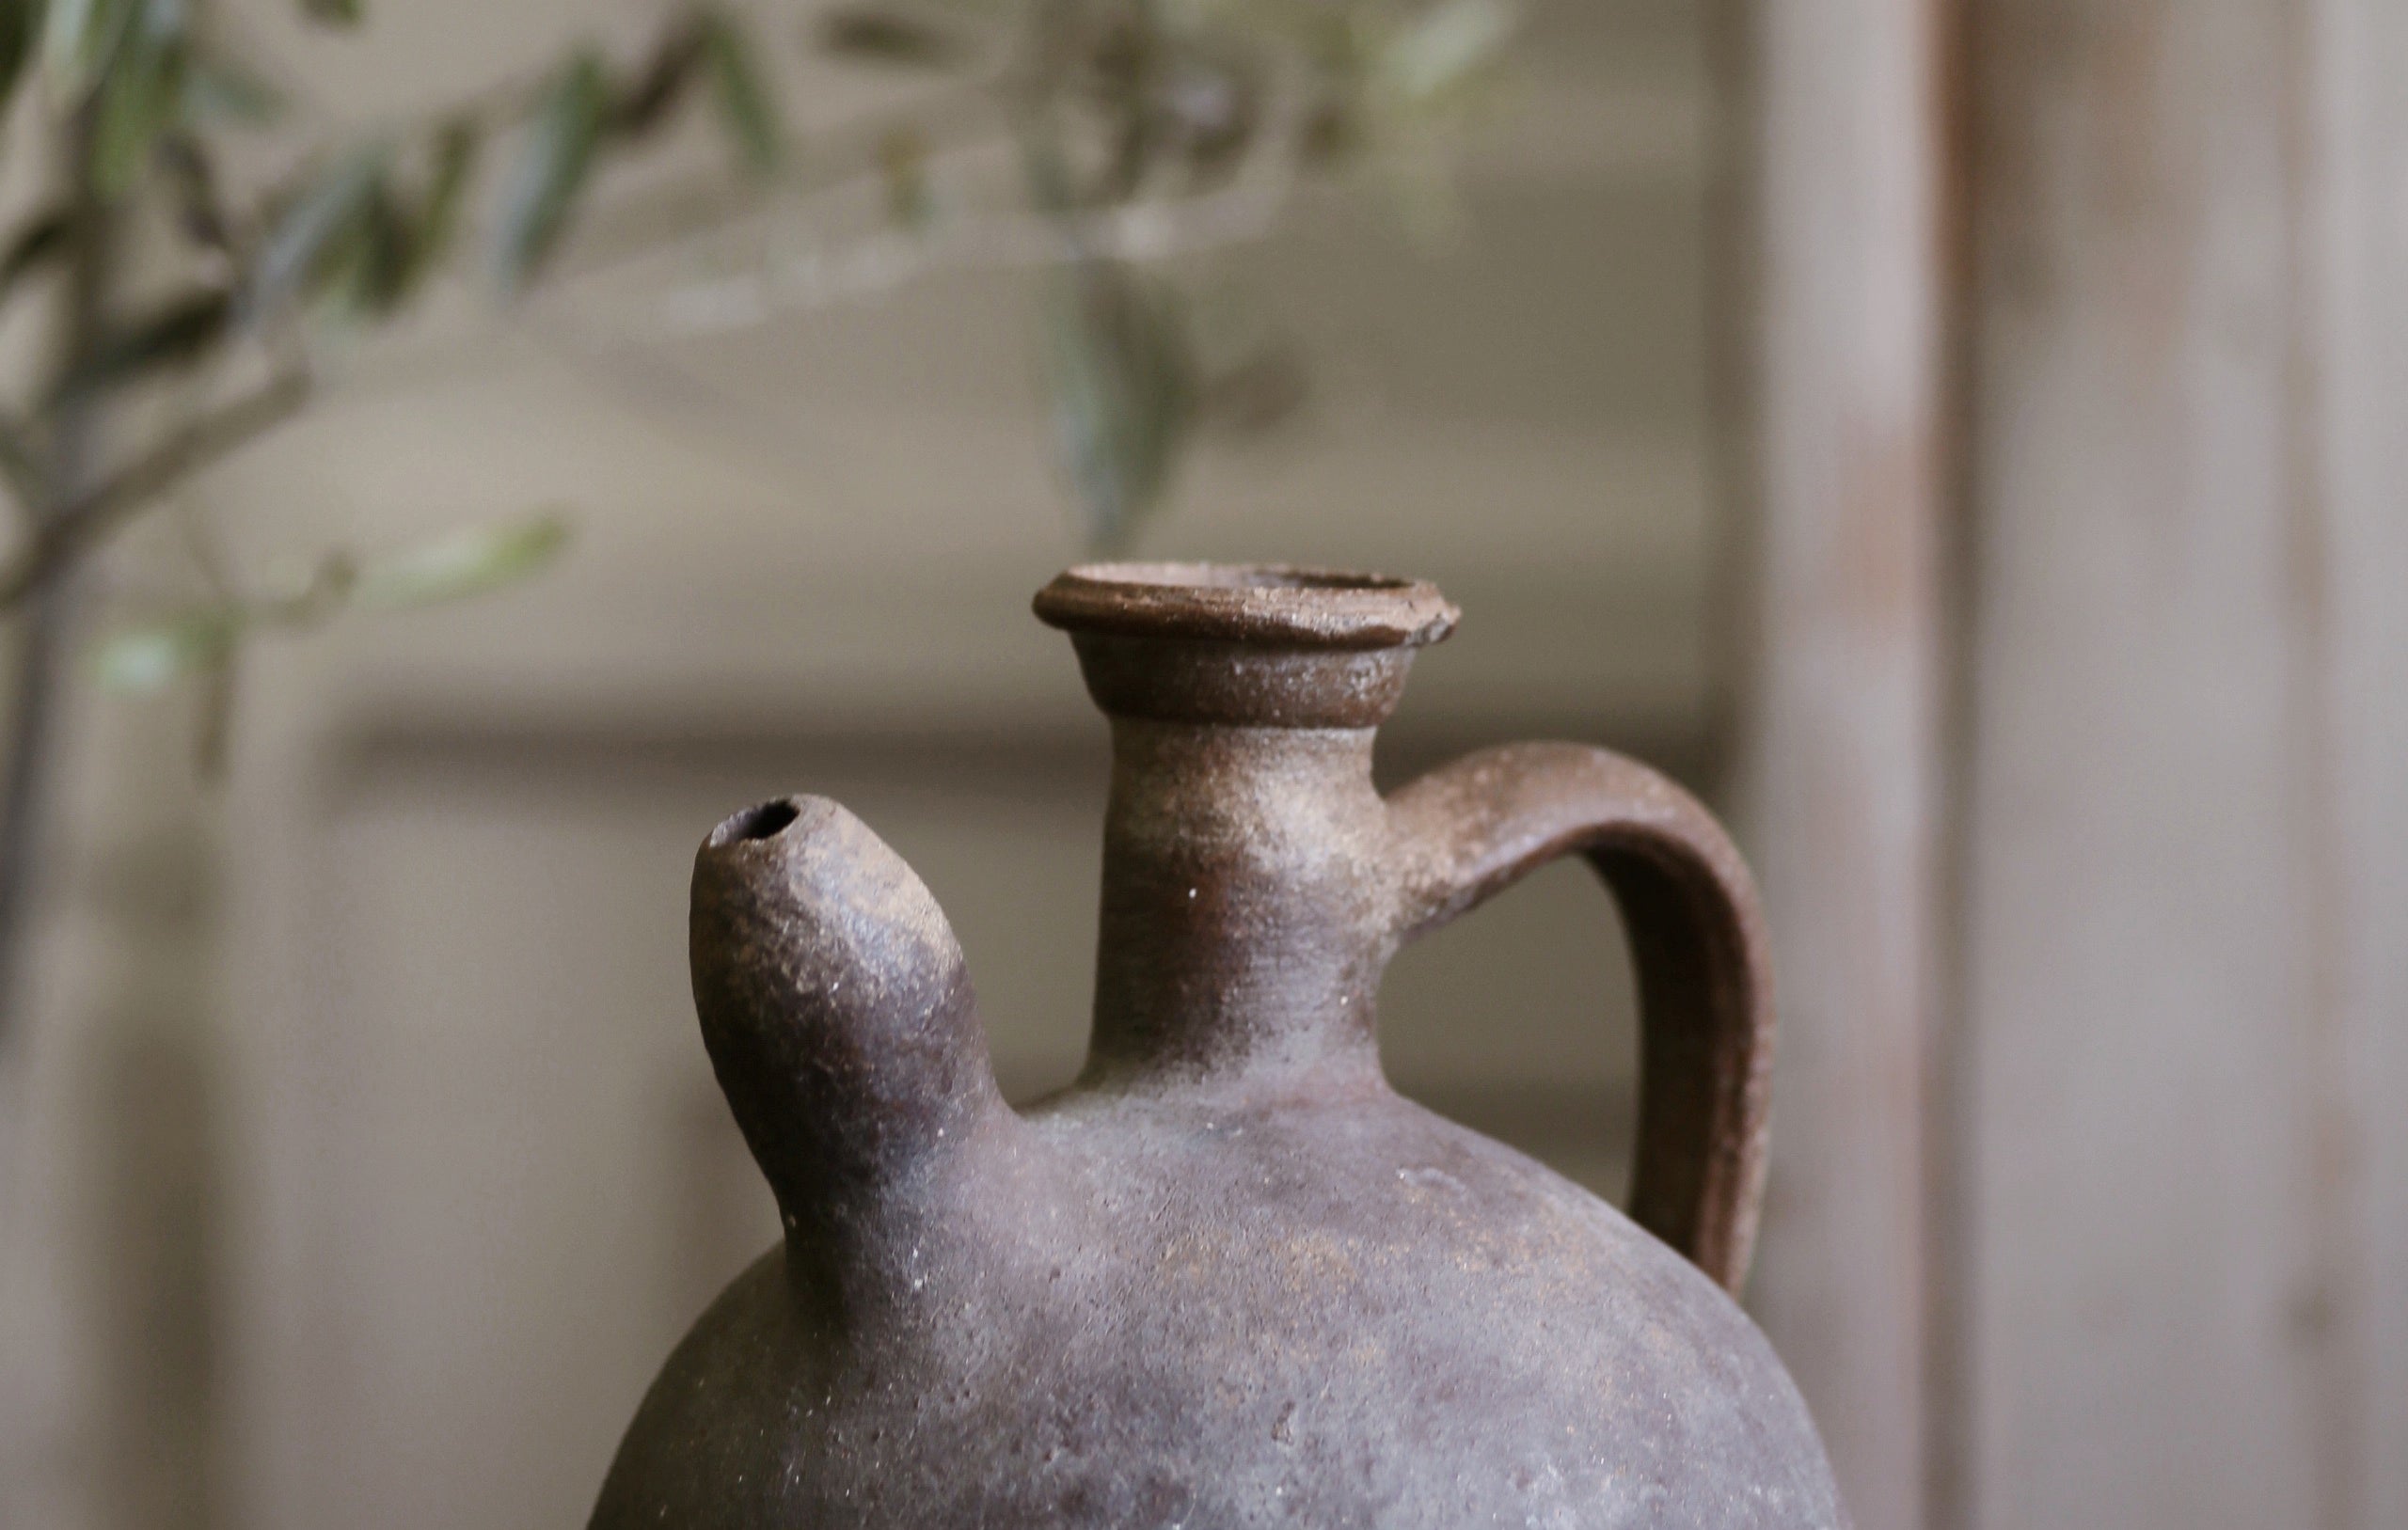 Unique antique Turkish pottery piece as decorative homeware for natural interiors